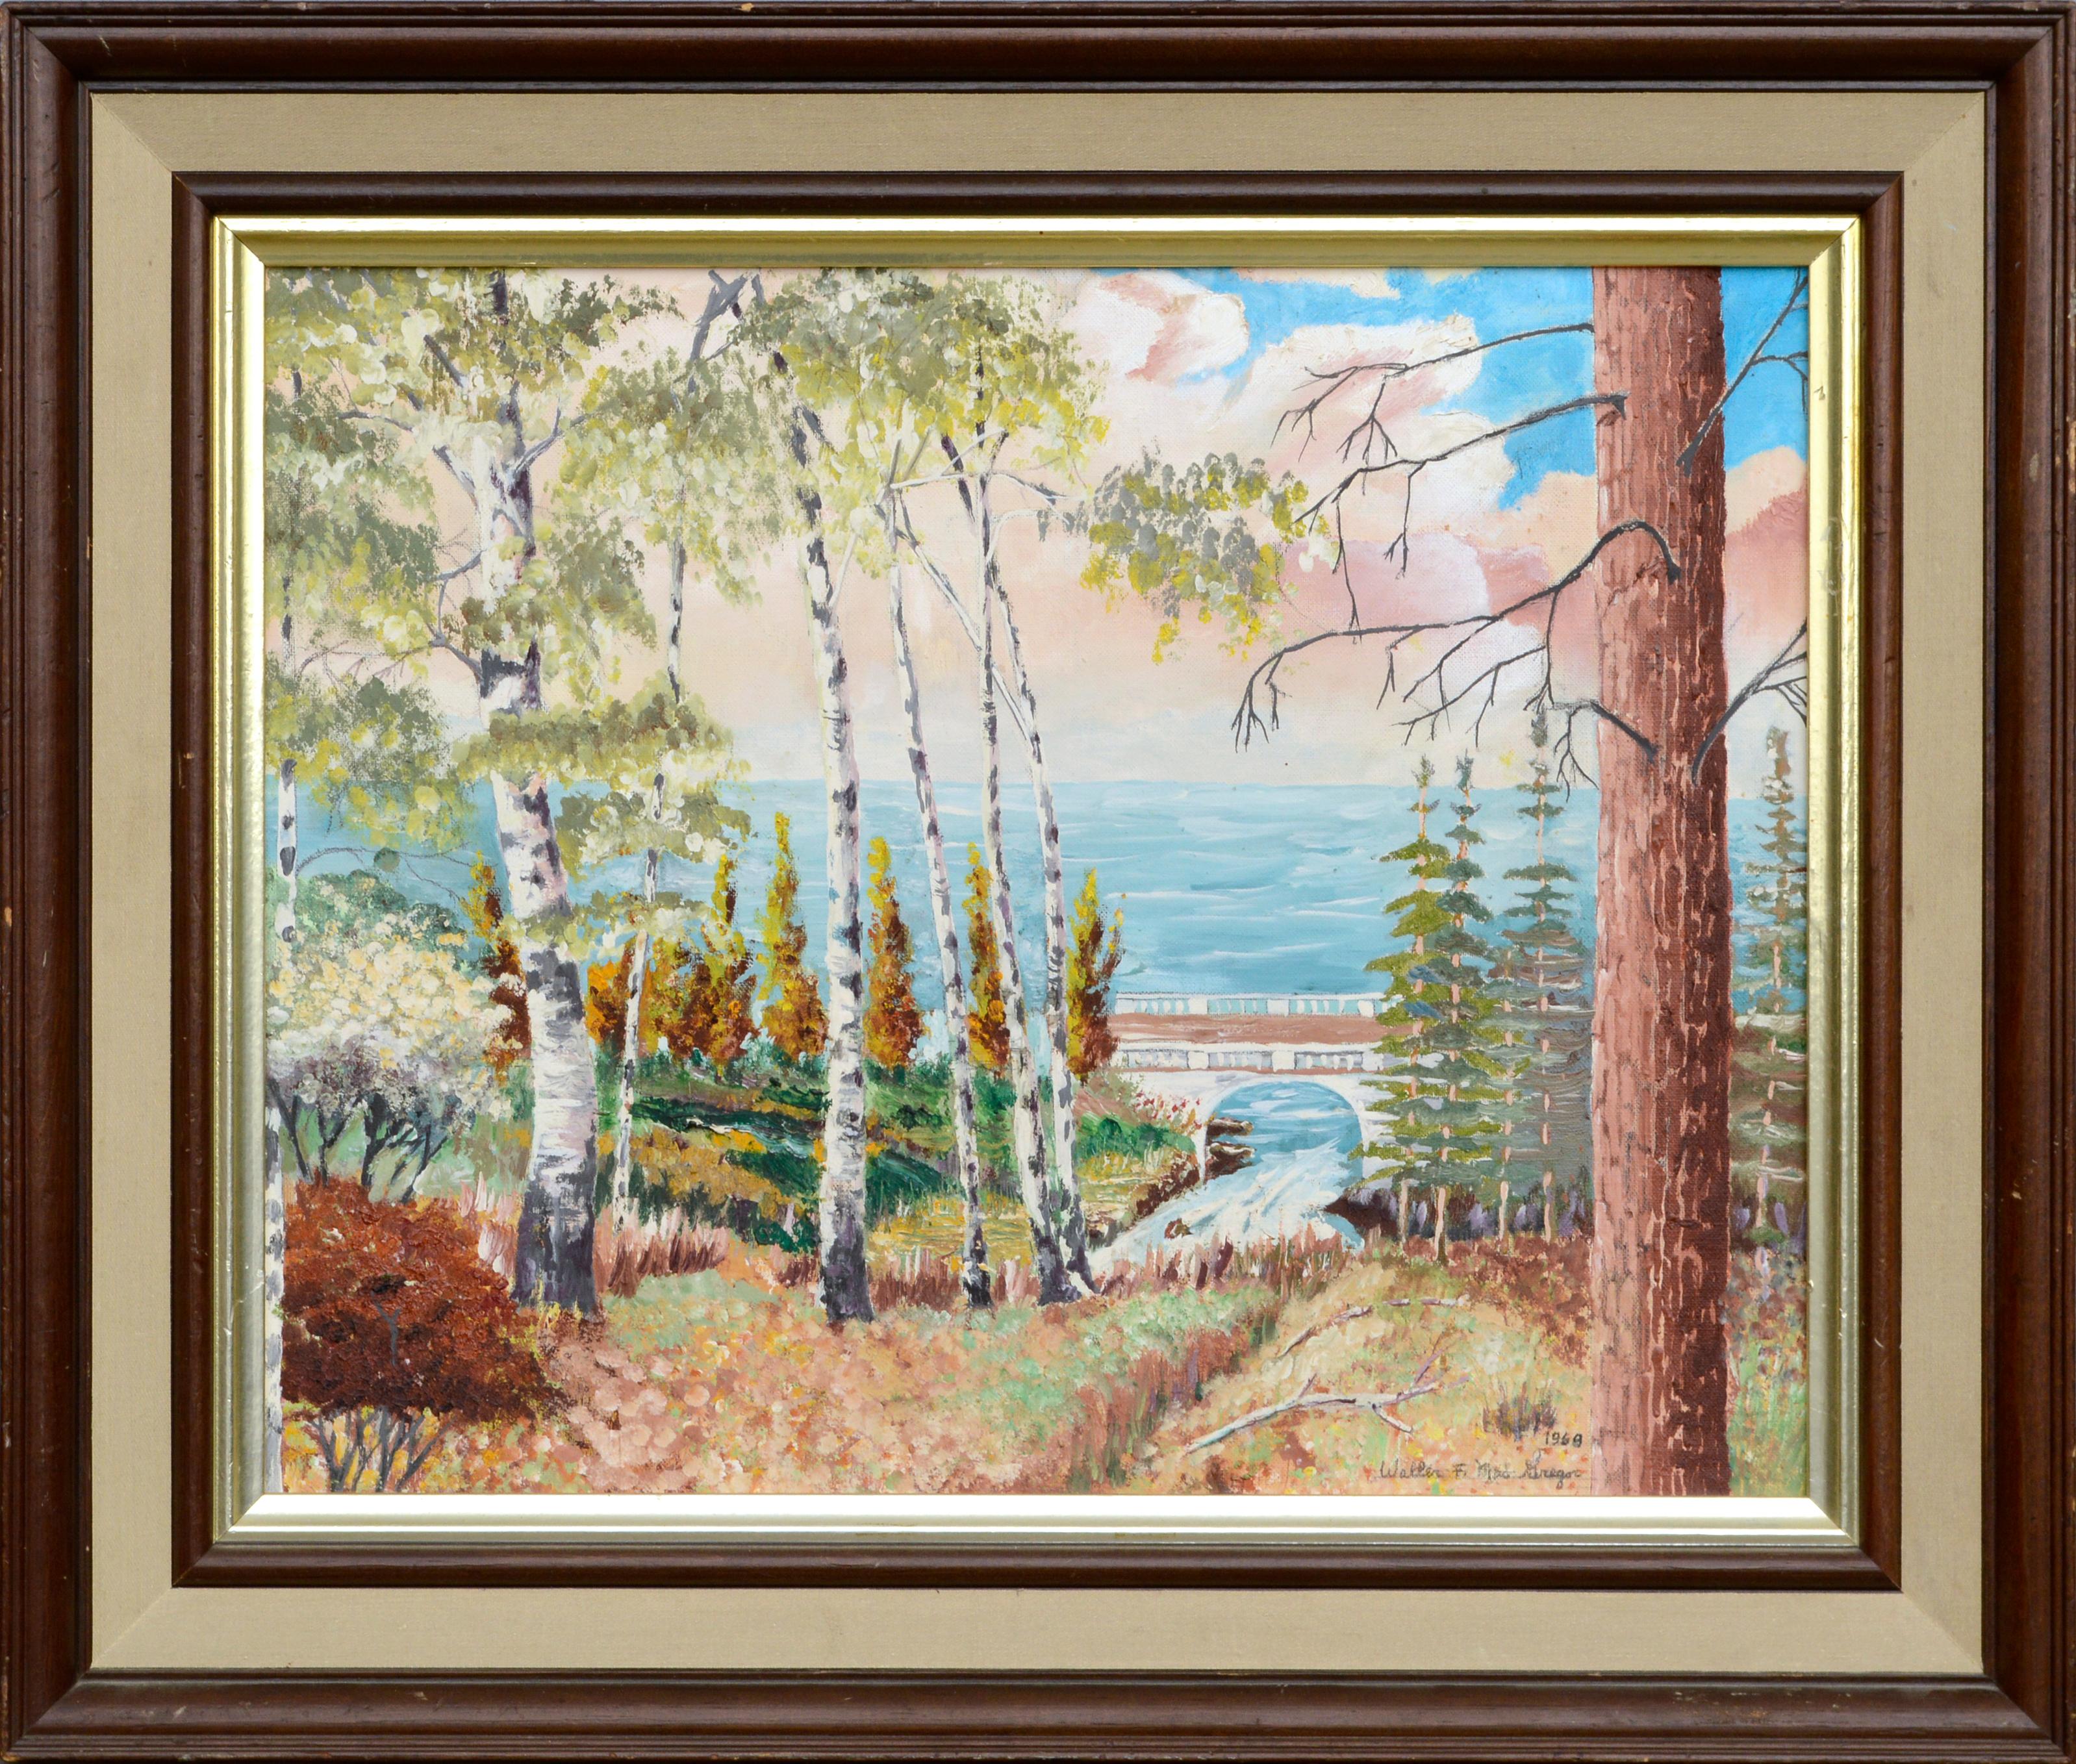 Walter F. MacGregor Landscape Painting - The Cascades Landscape in Oil on Artist's Board